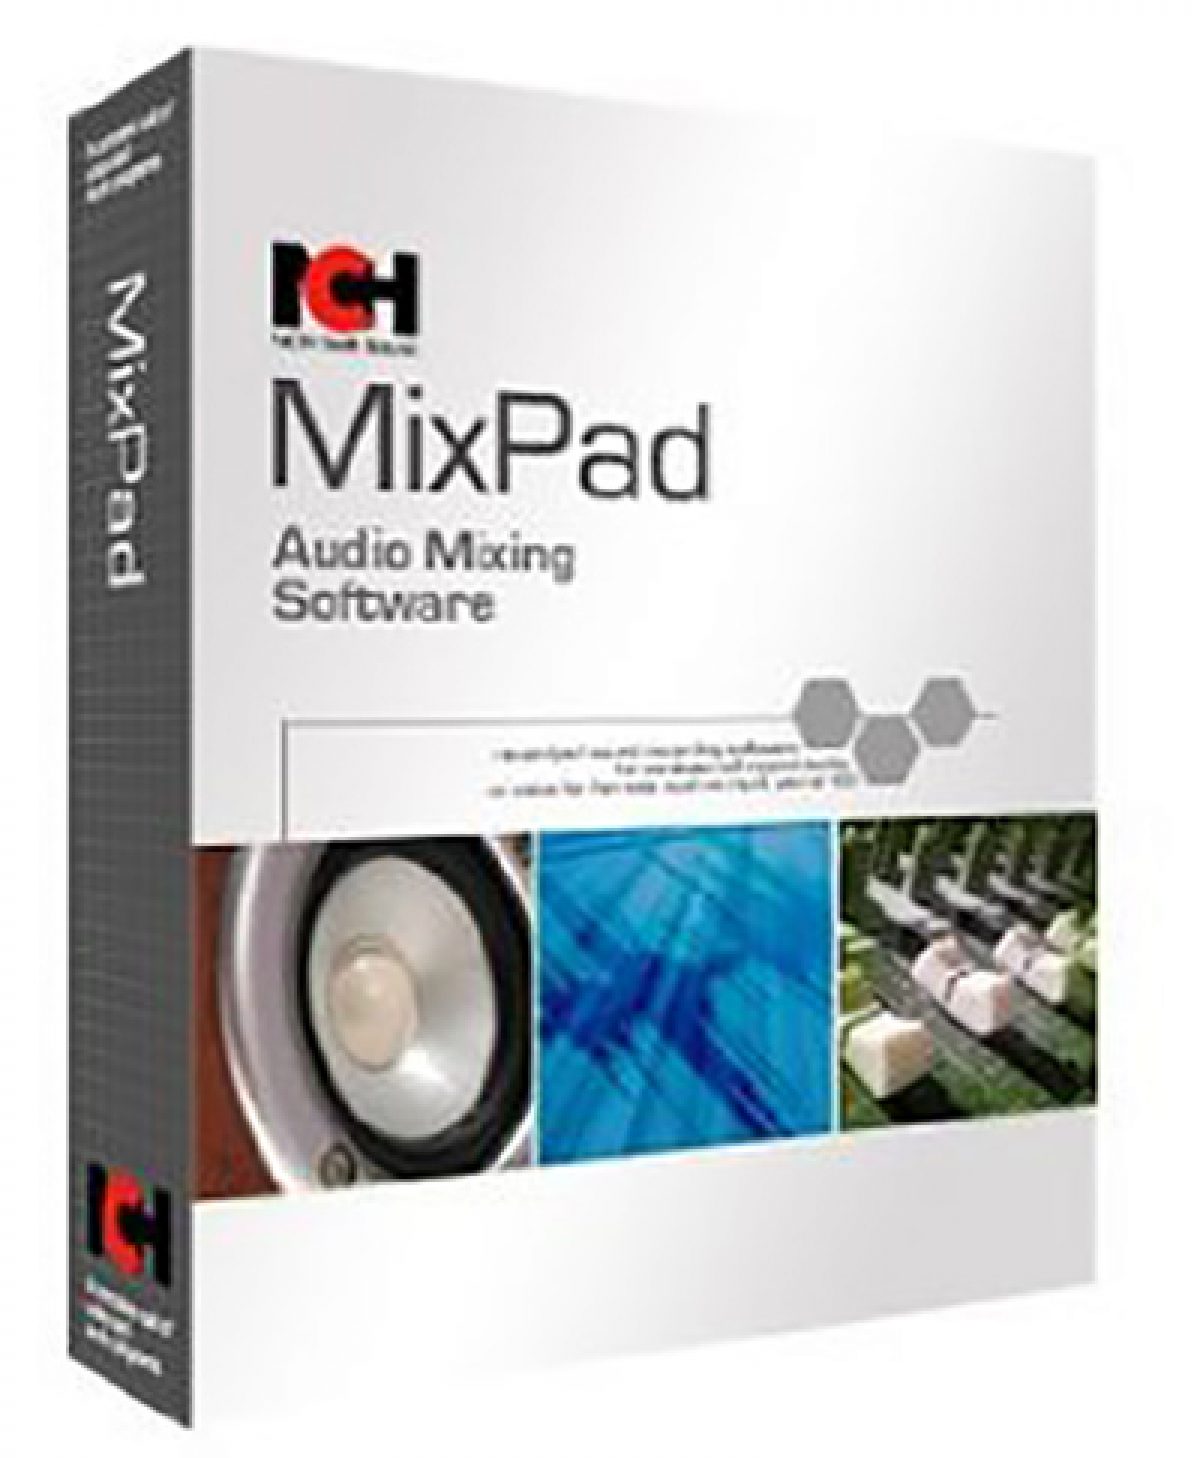 mixpad master edition